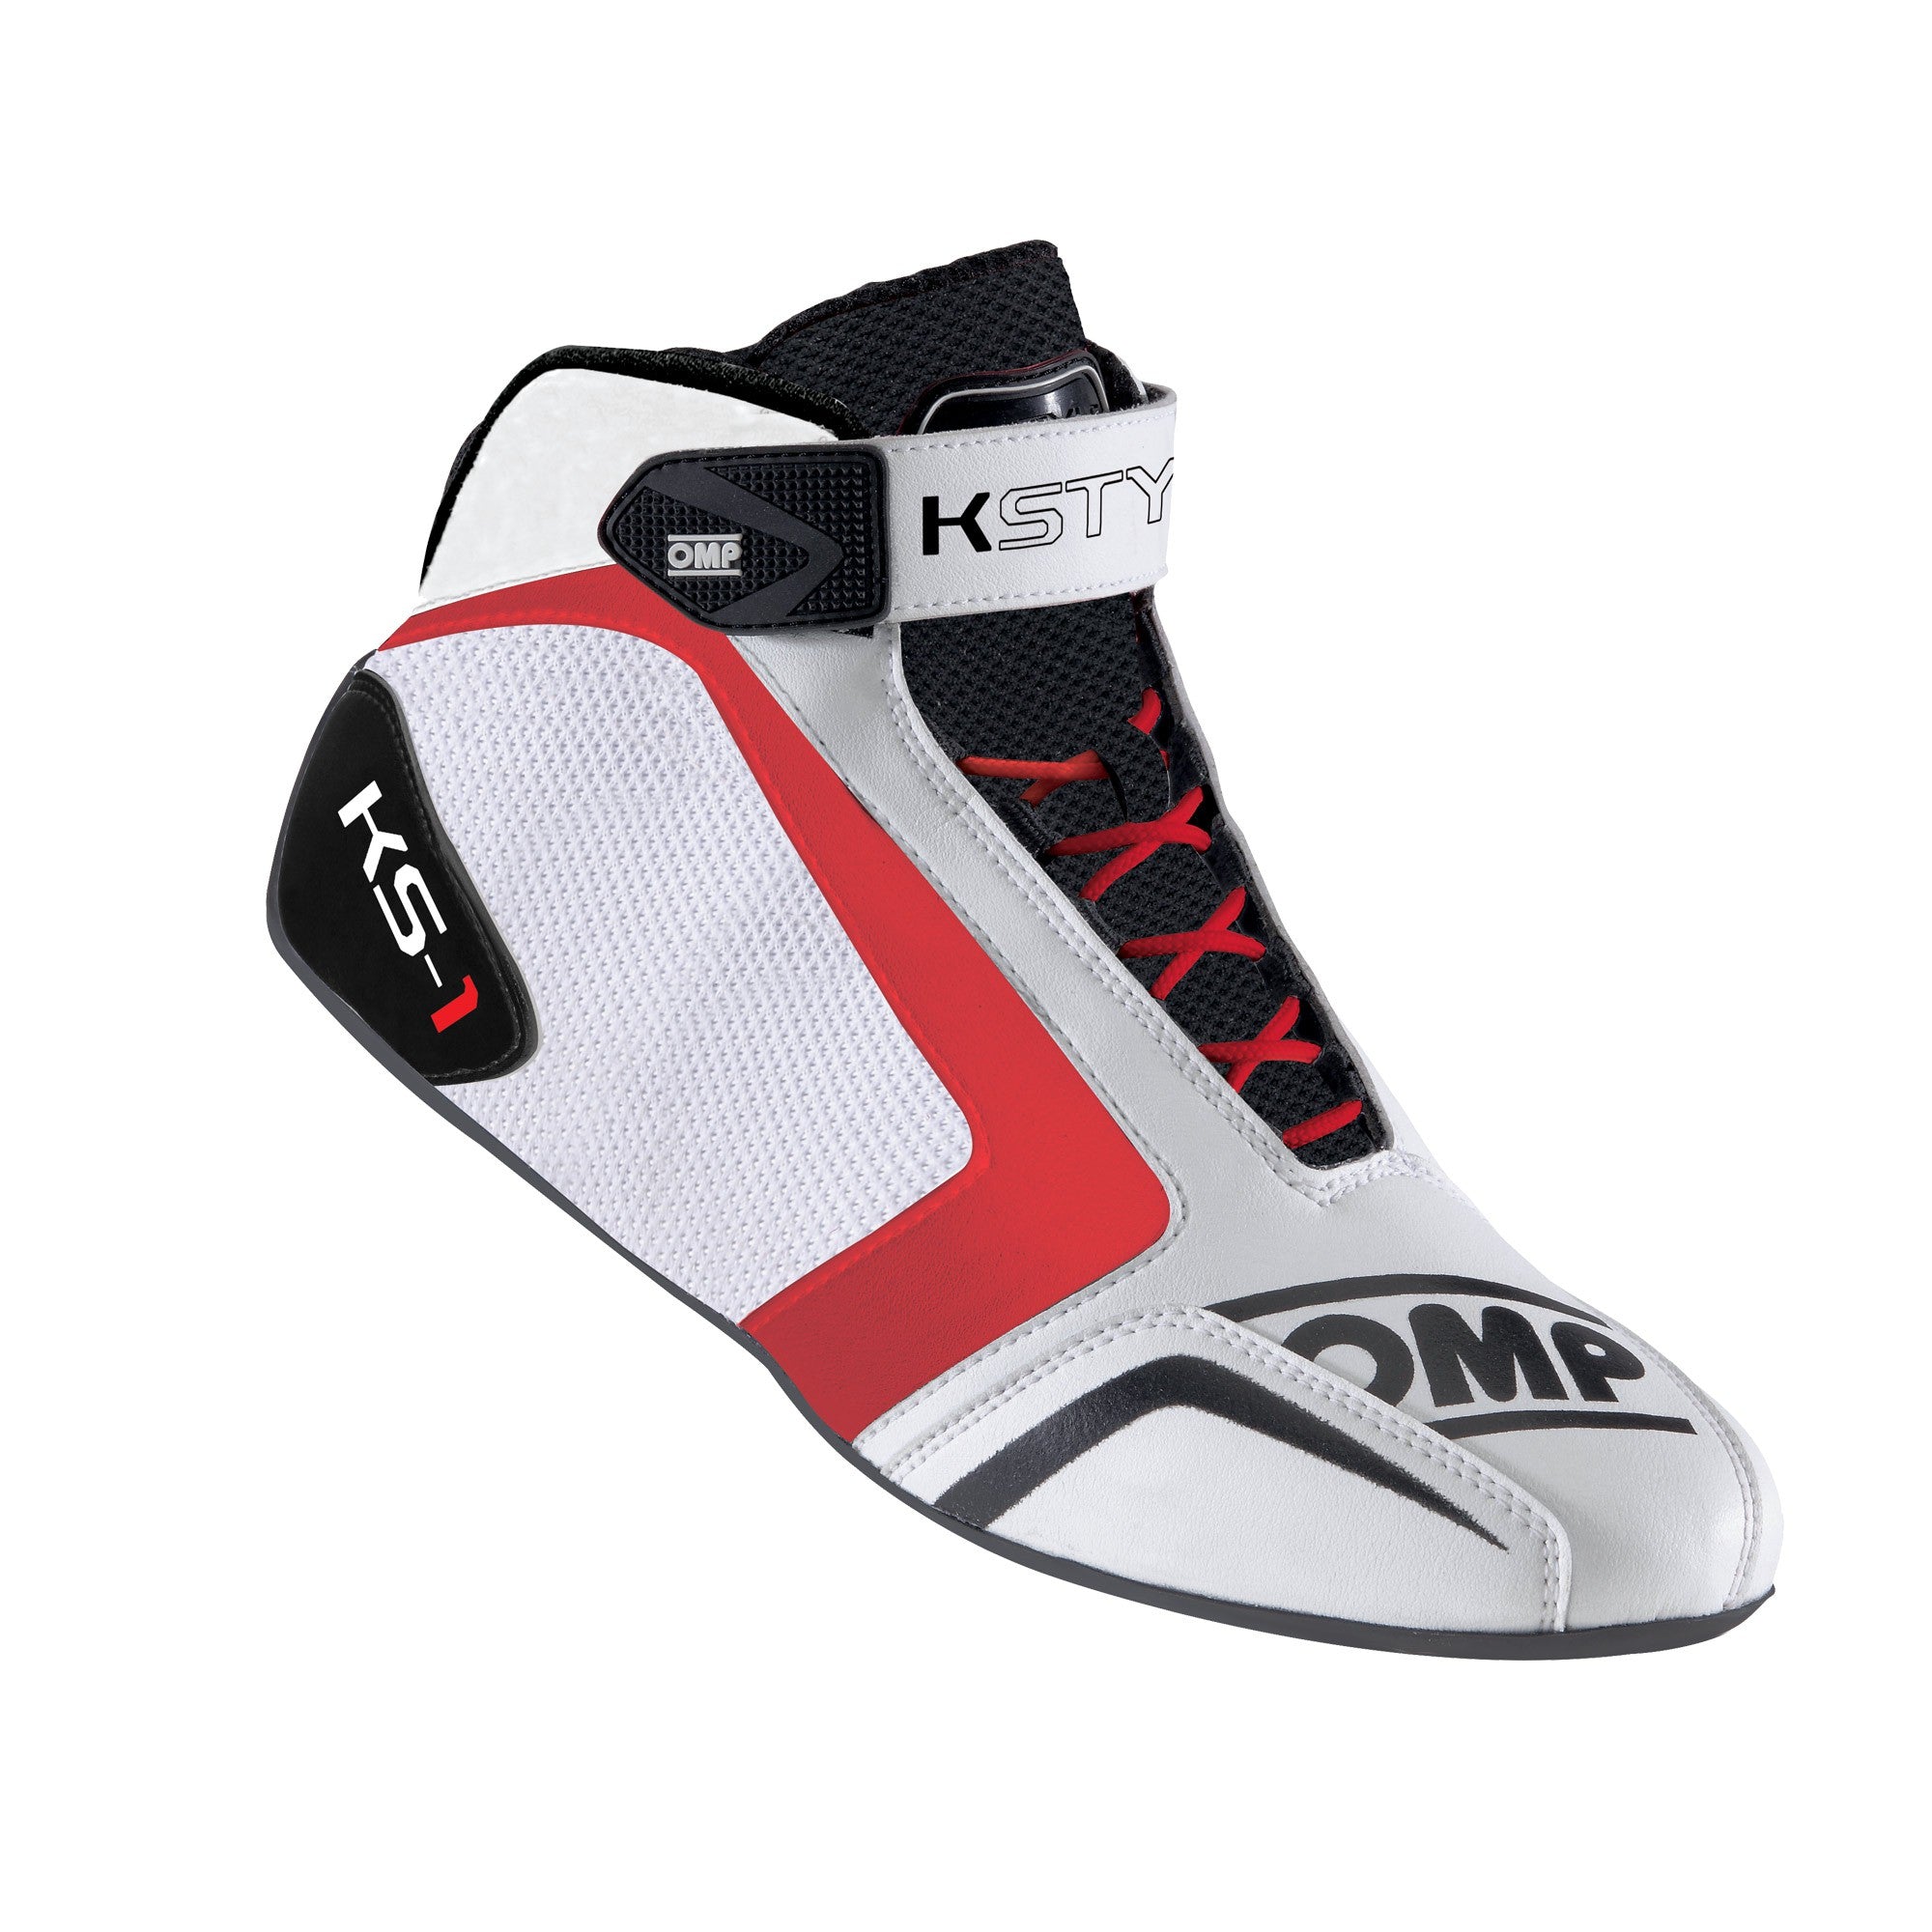 OMP KC0-0815-A01-120-39 (IC/81512039) Kart shoes KS-1, white/black/red, size 39 Photo-0 